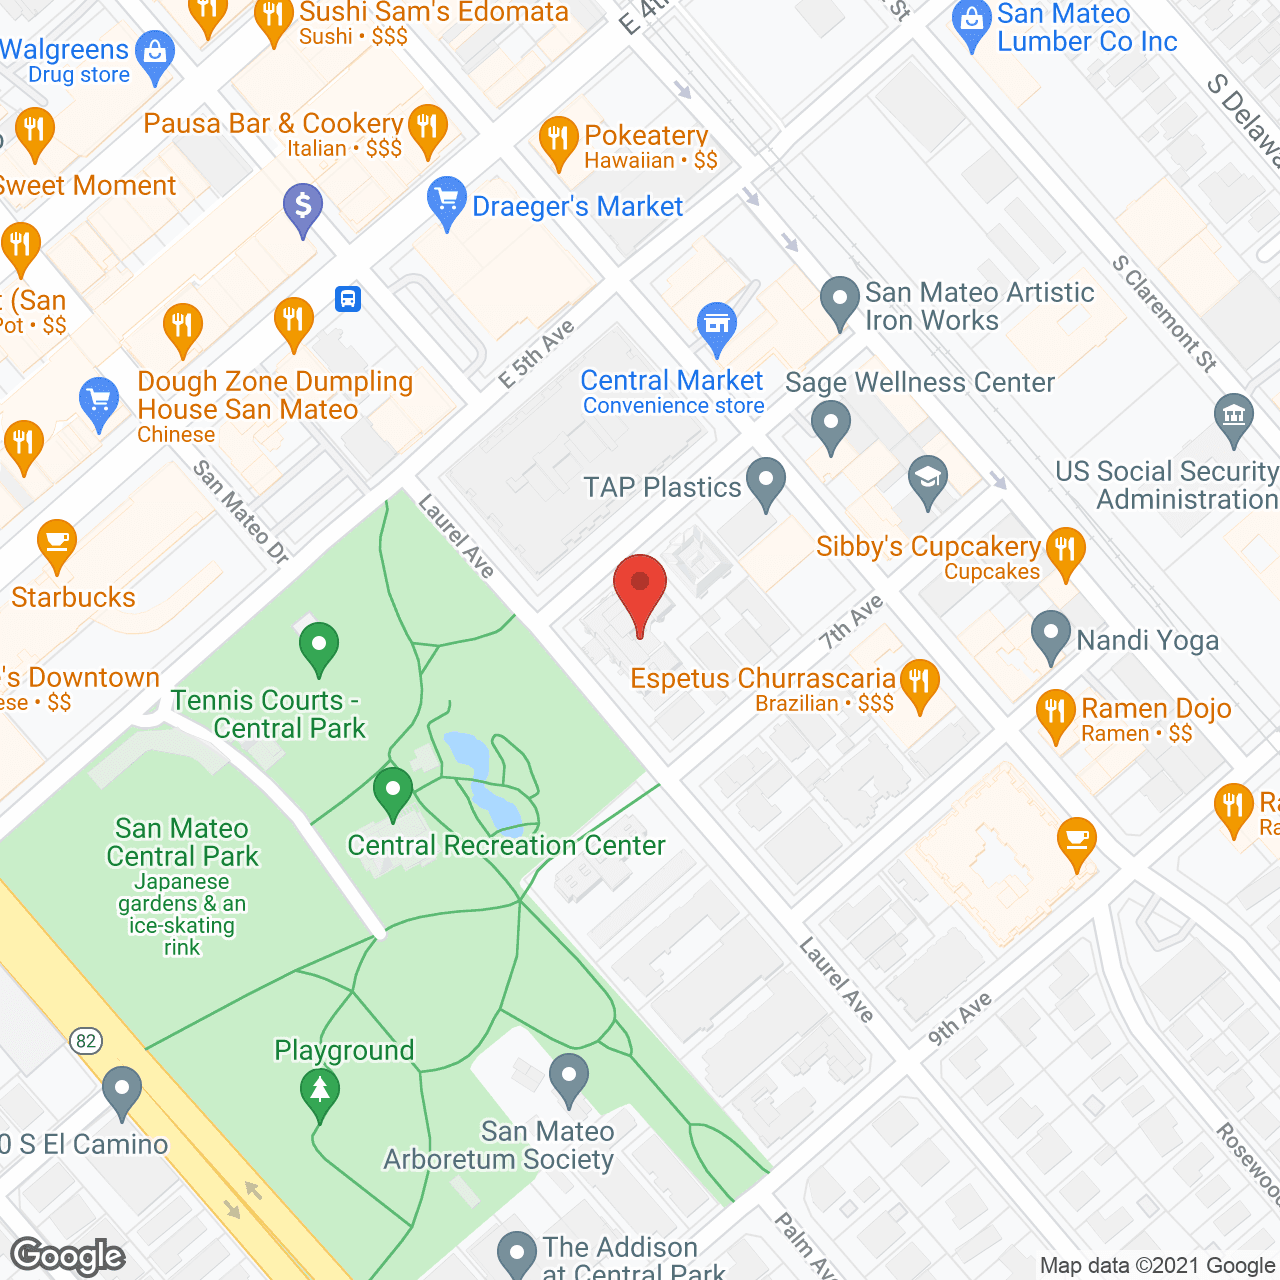 The Stratford in google map